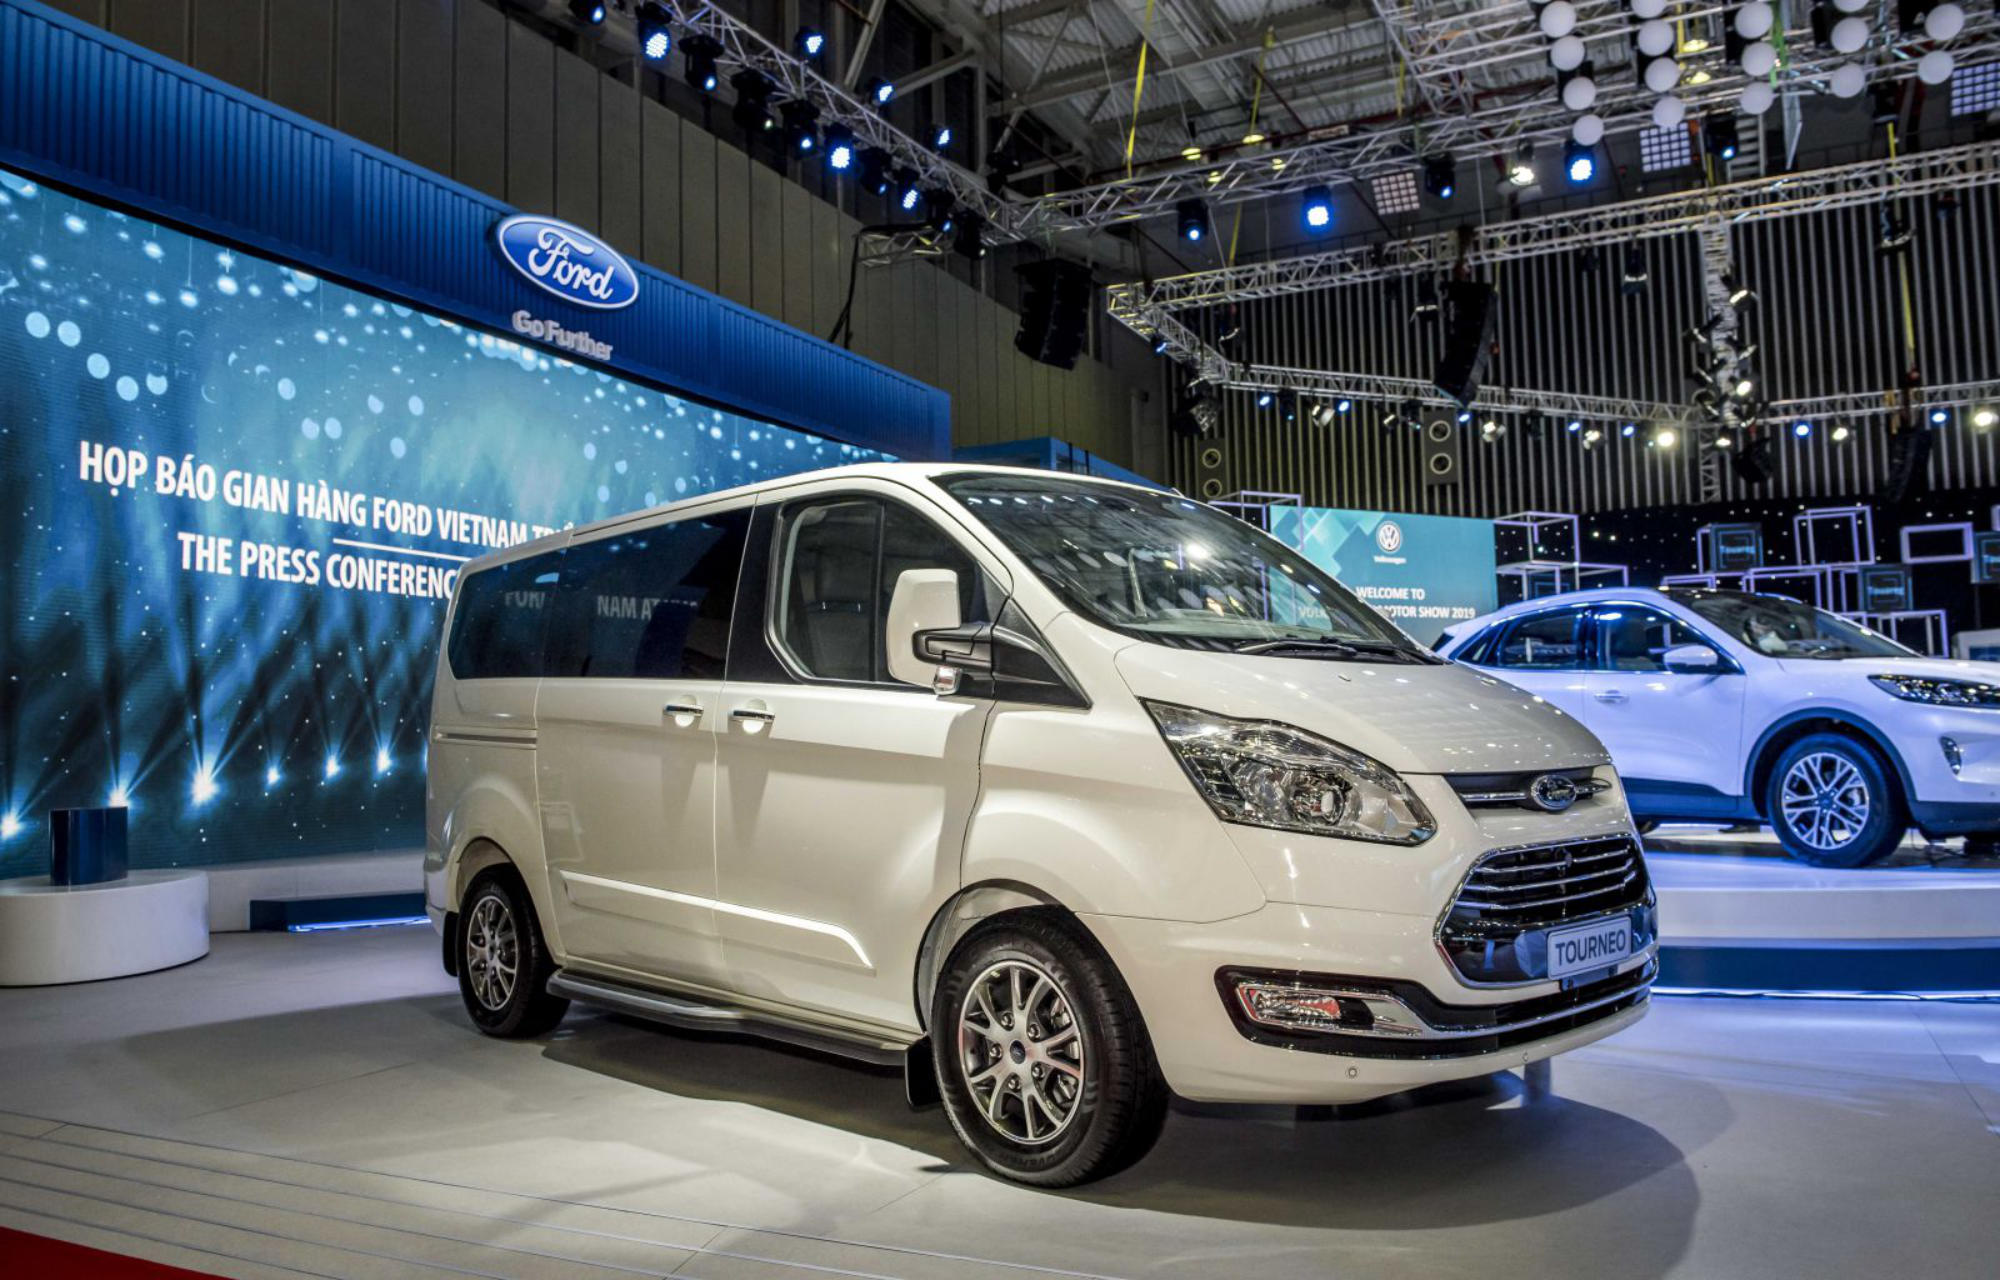 Motor-Show-Vietnam-City-Ford